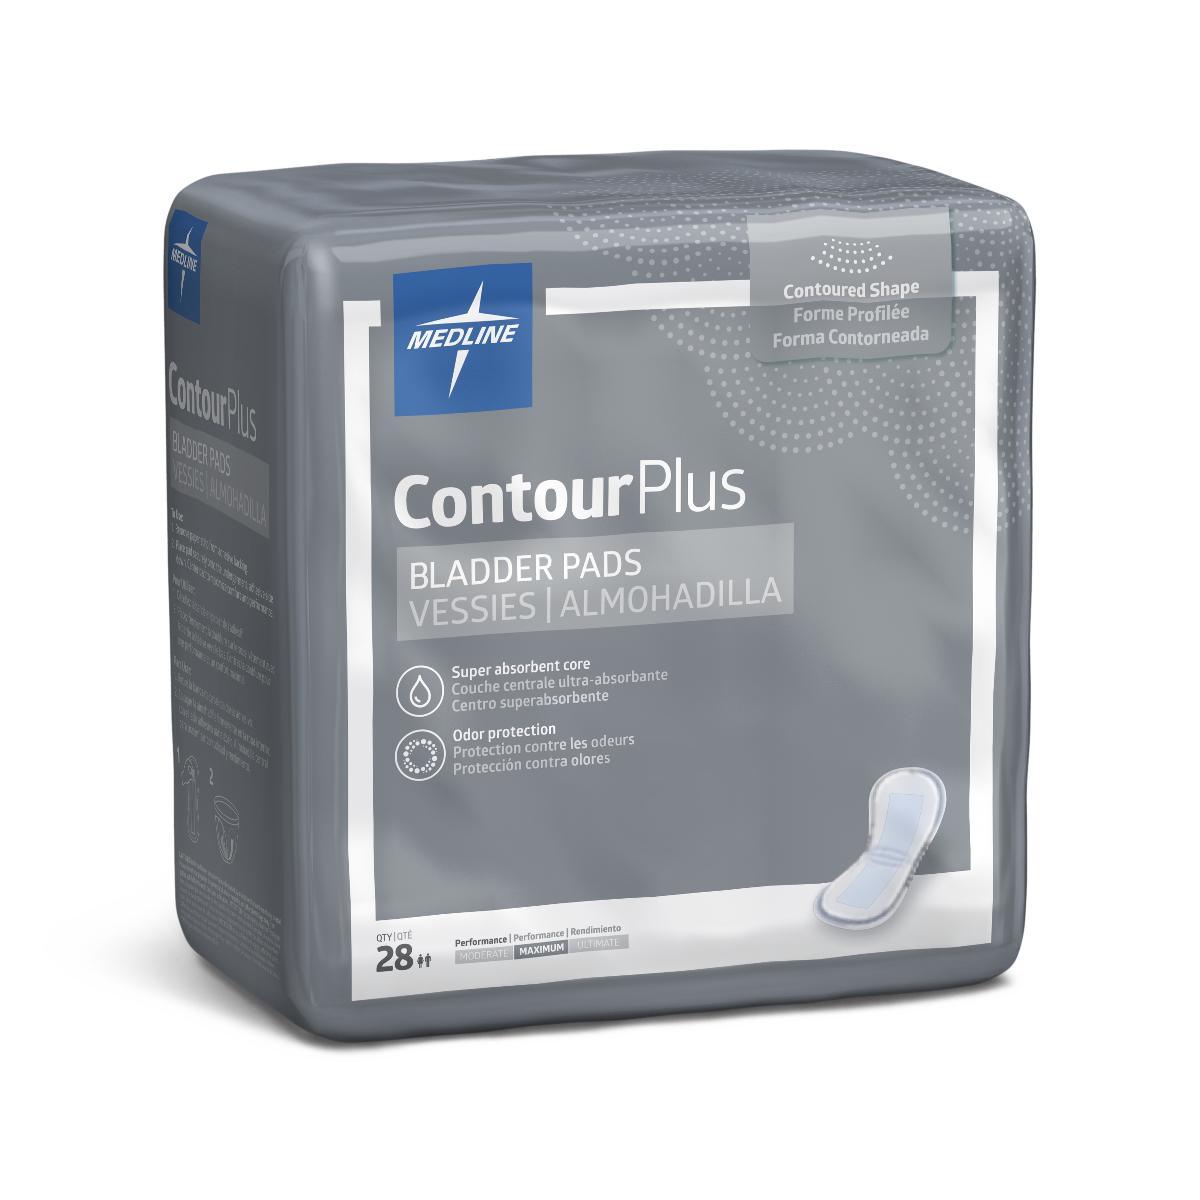 ContourPlus Bladder Control Pads (5.5" x 10.5") : Moderate